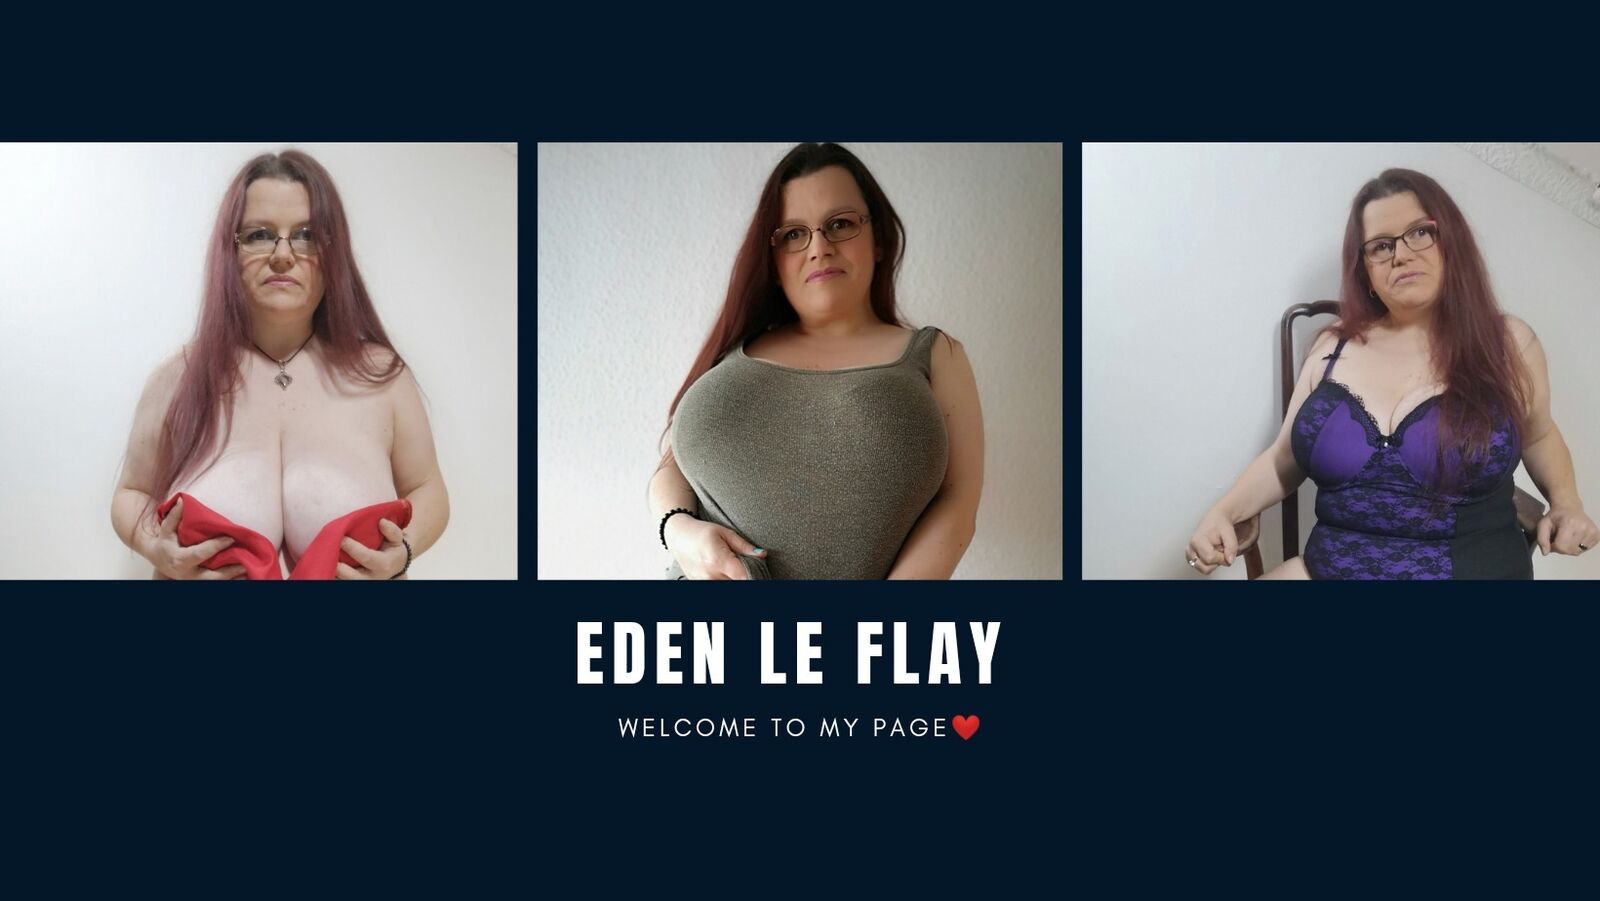 See Lady Eden Le Flay profile